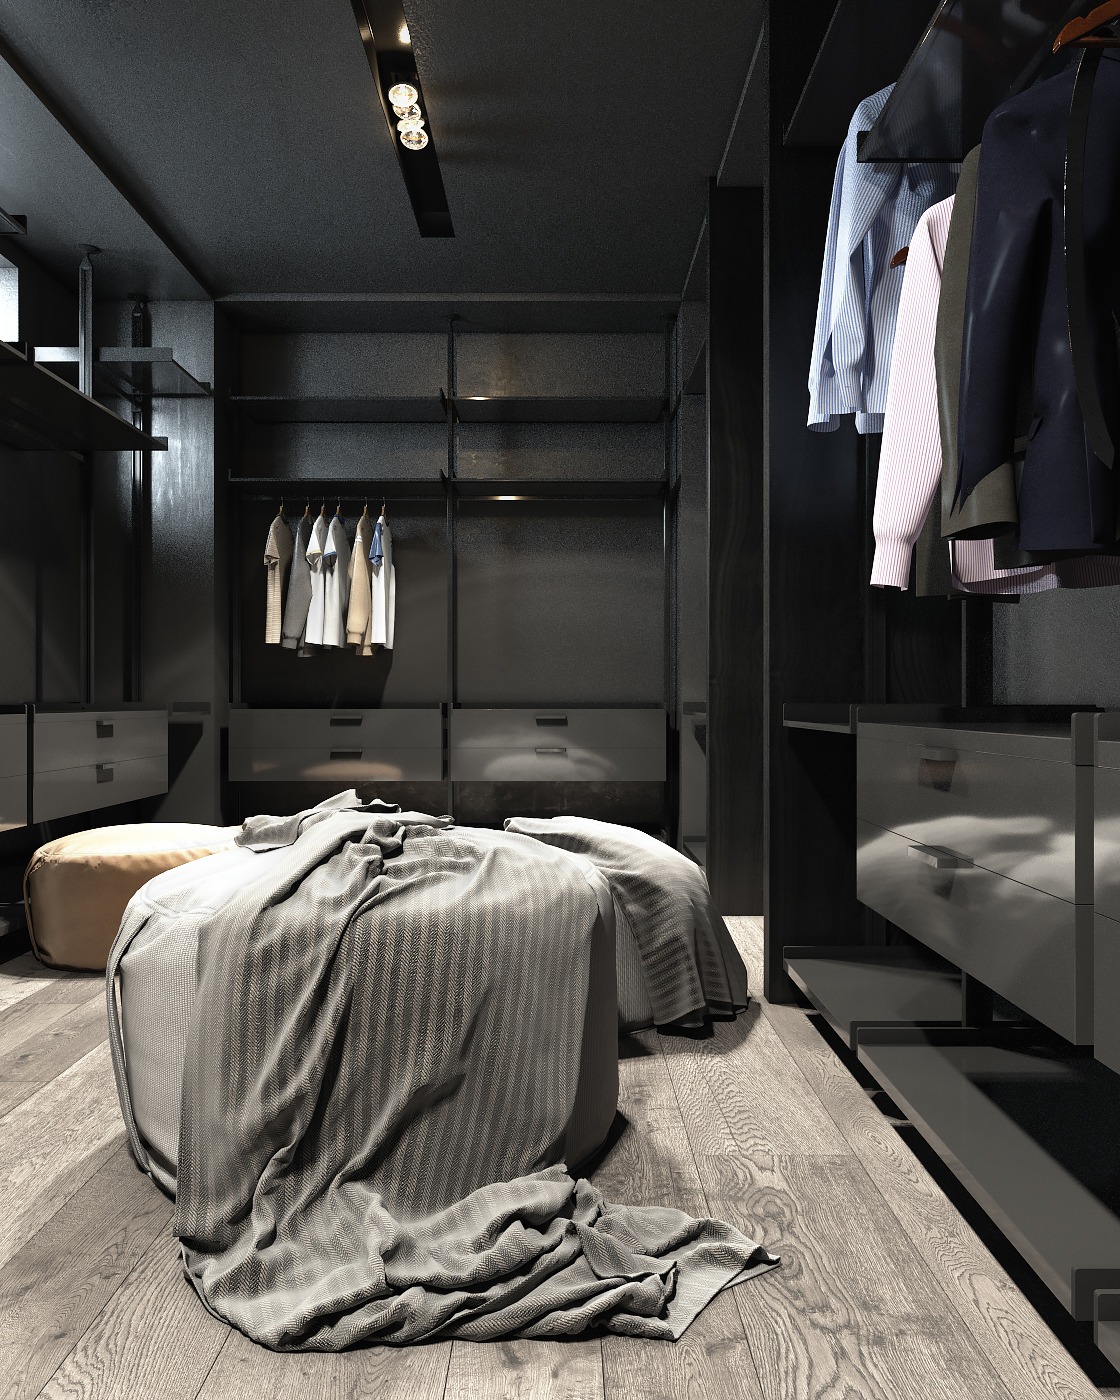 https://www.home-designing.com/wp-content/uploads/2015/11/black-walk-in-closet.jpg